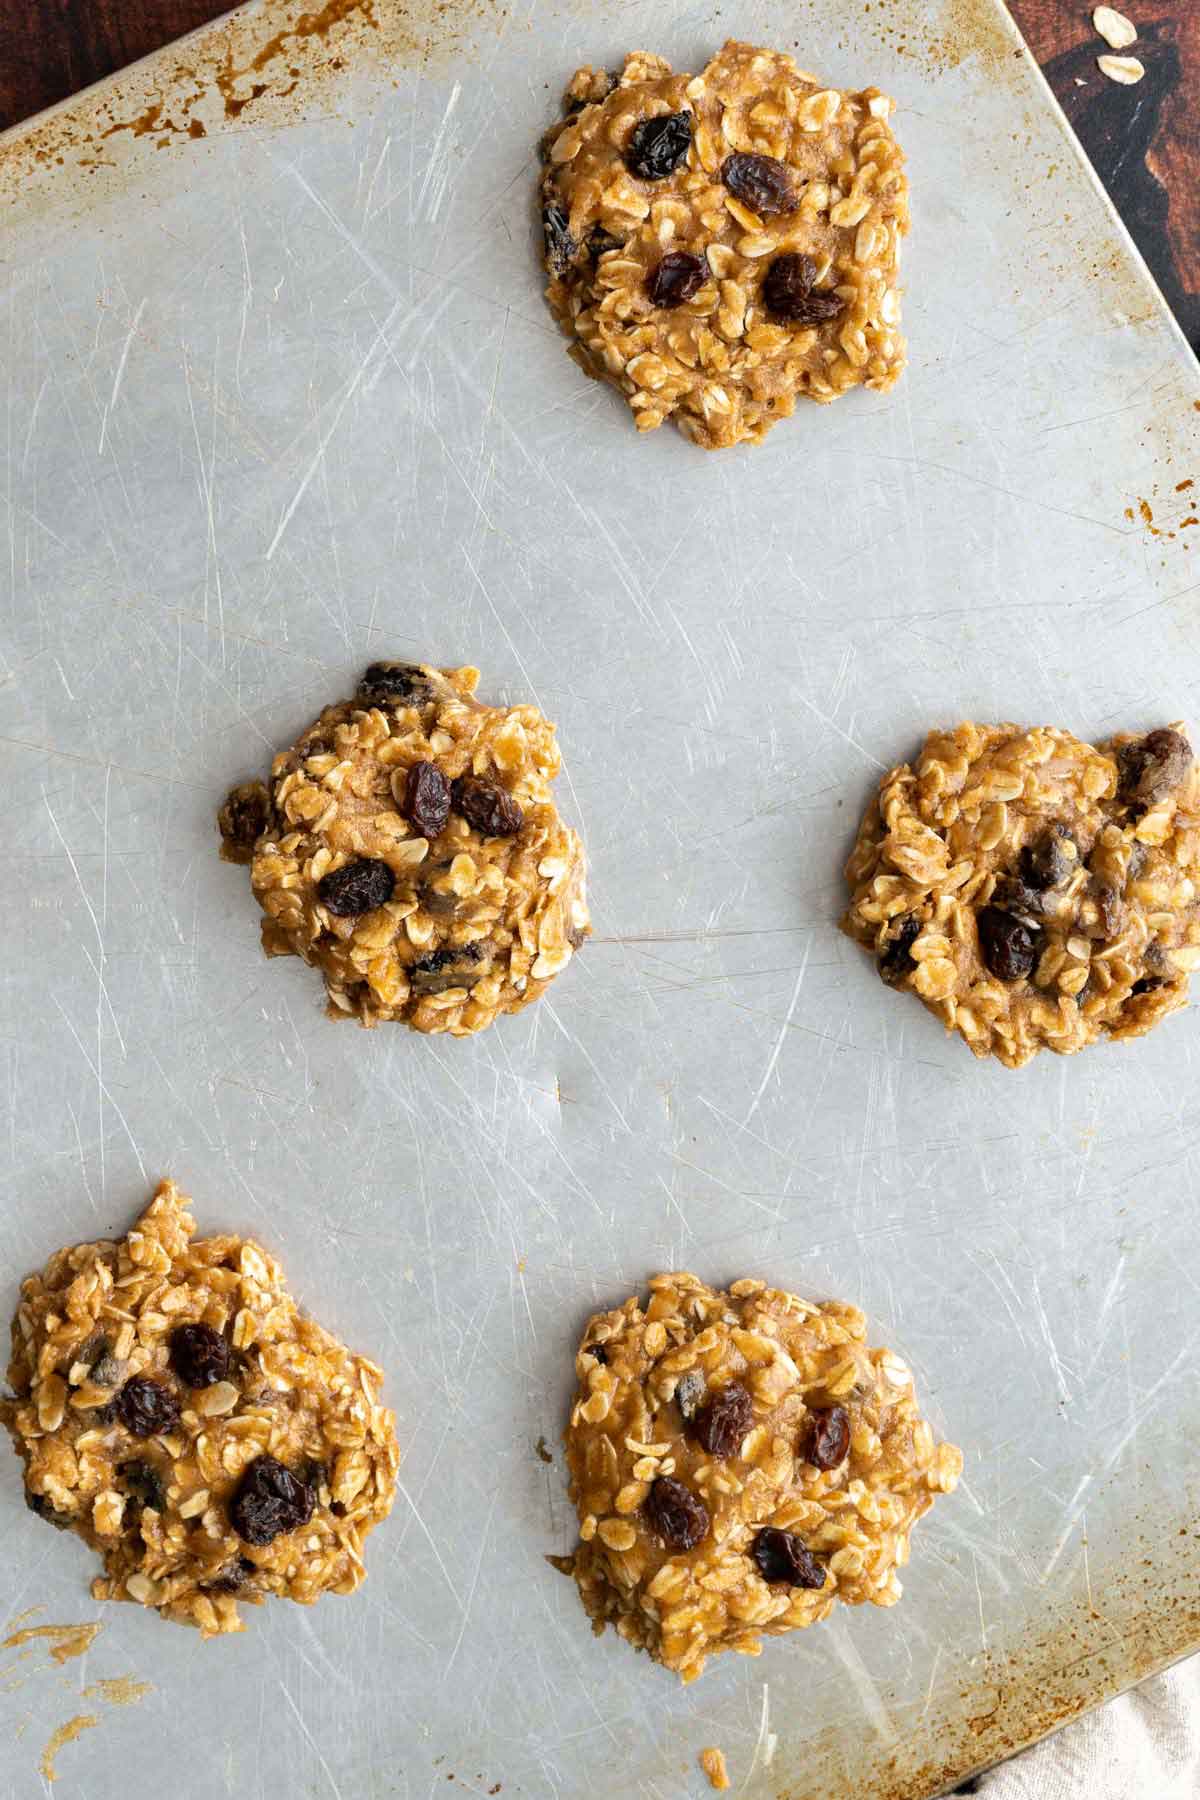 Oatmeal cookies before baking.